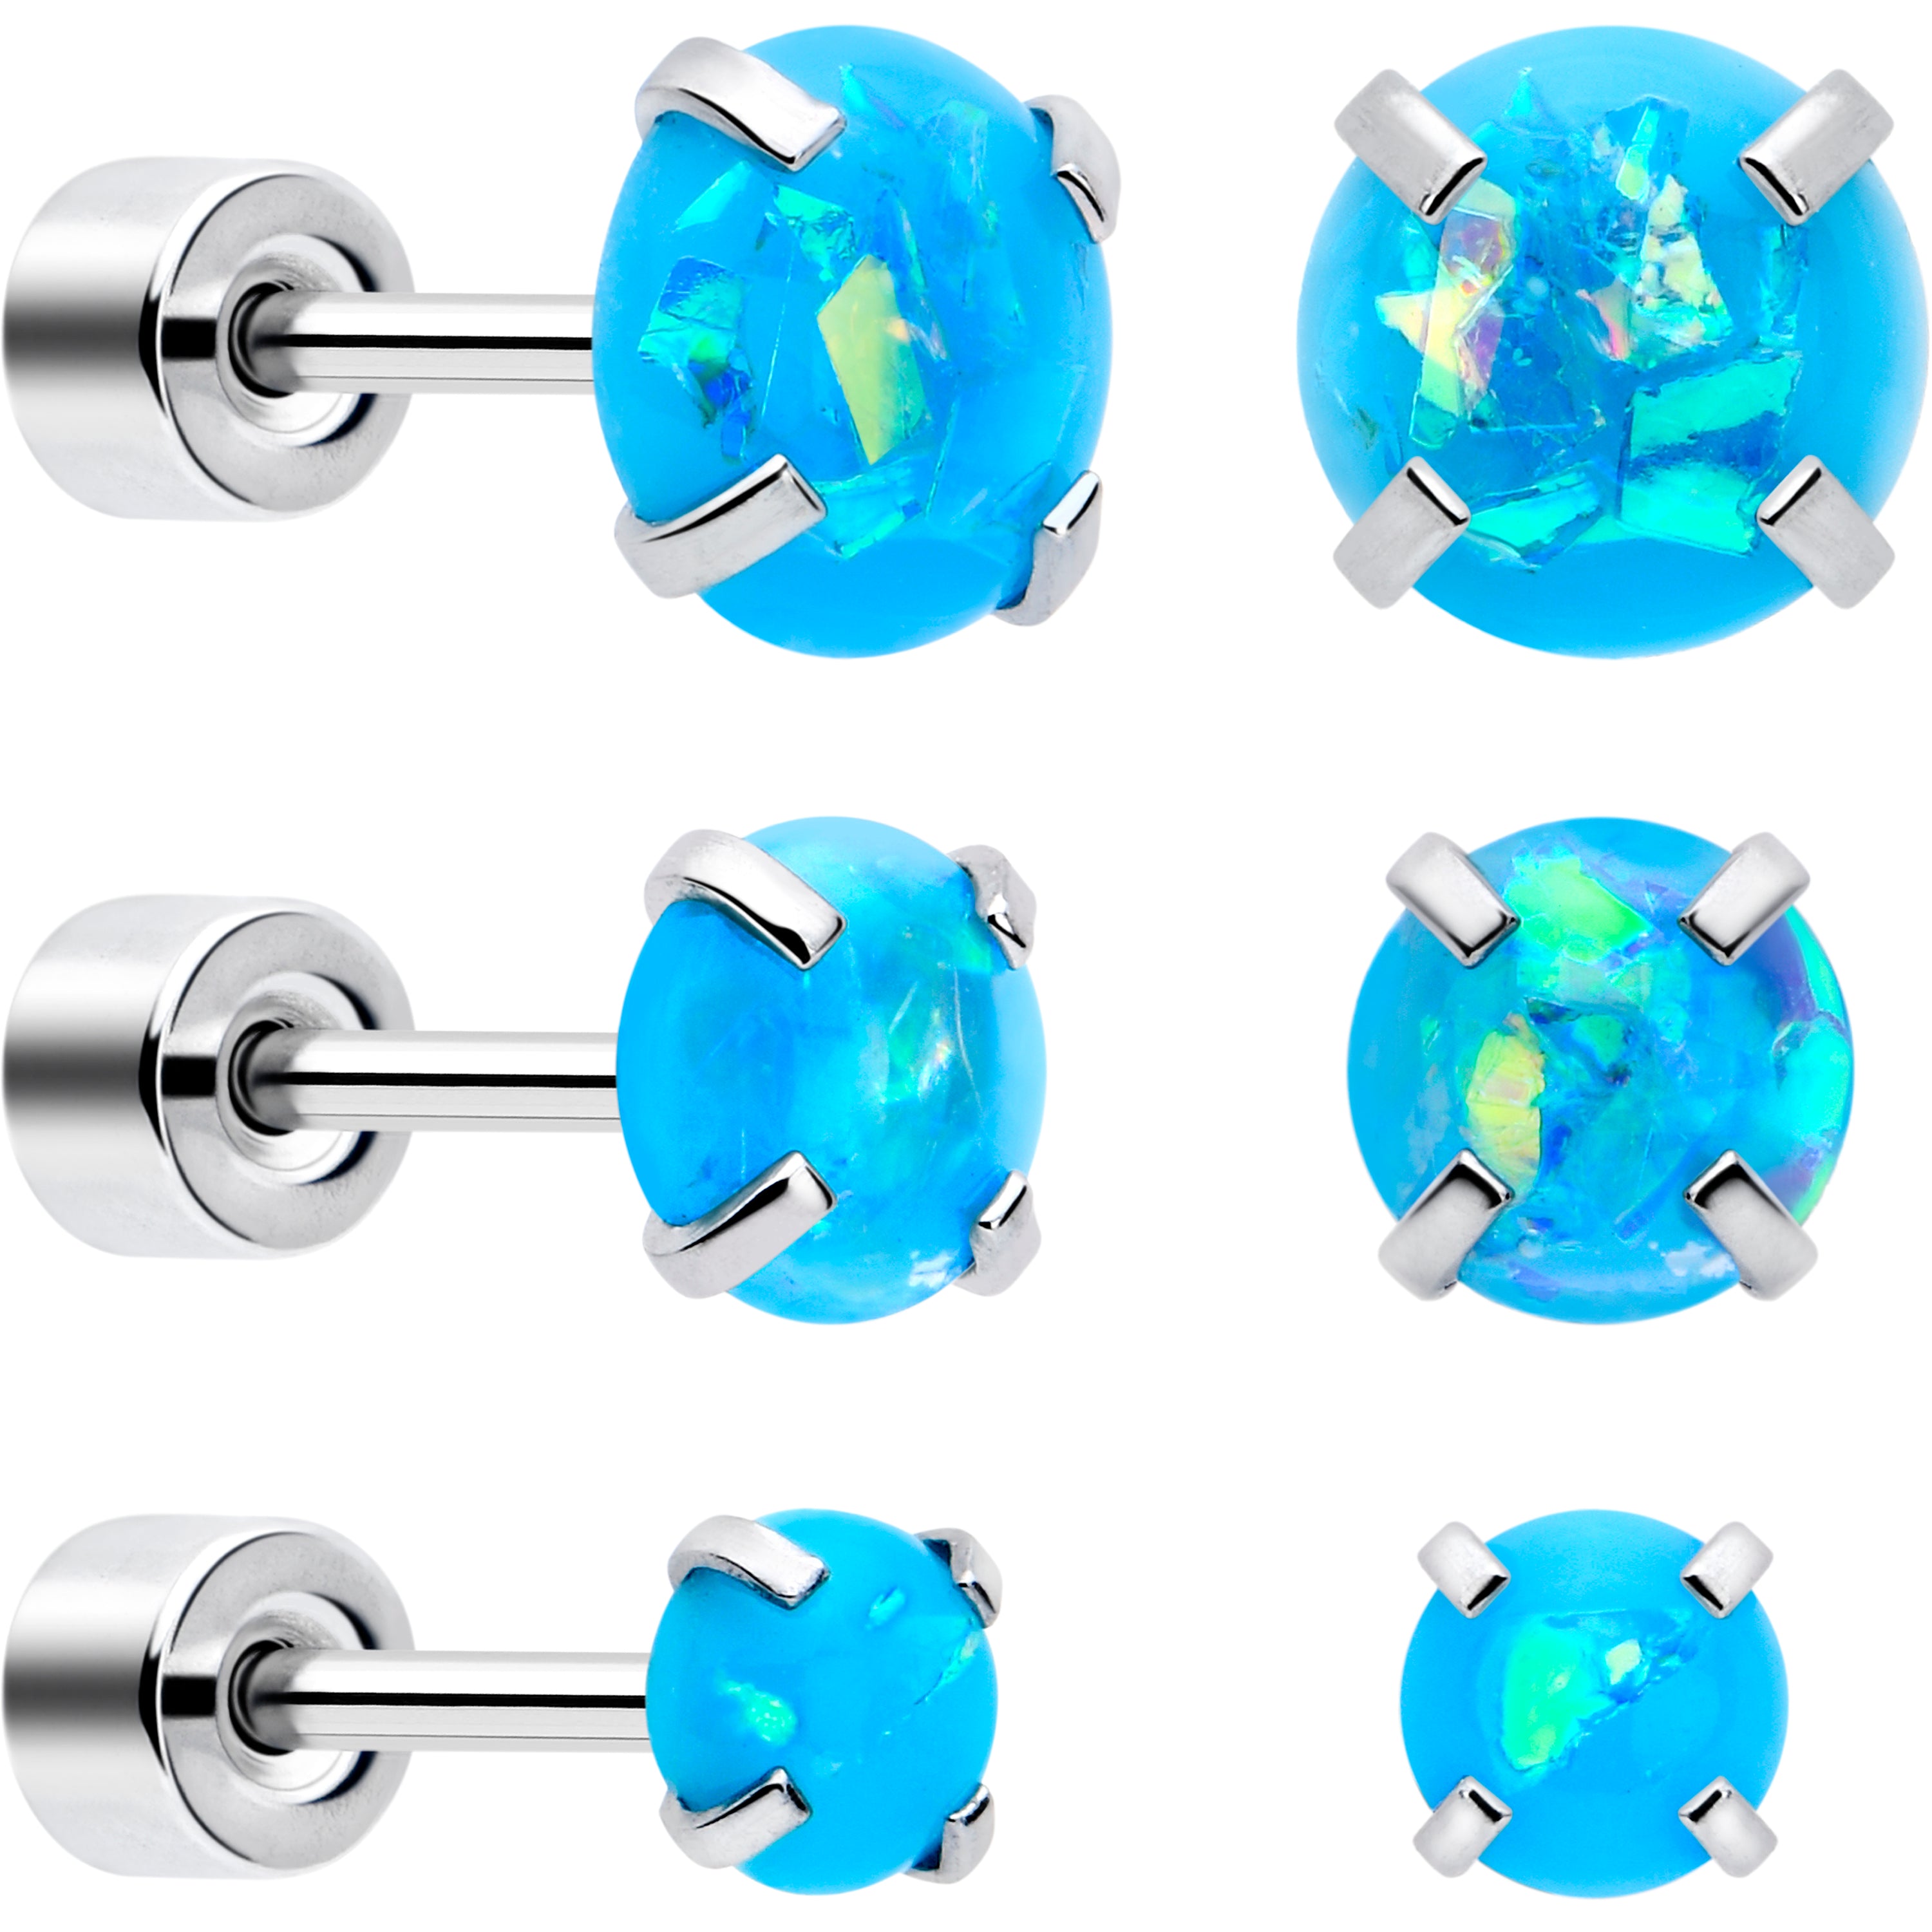 Blue Sythetic Opal Flat Back Stud Earrings - 3 Pairs